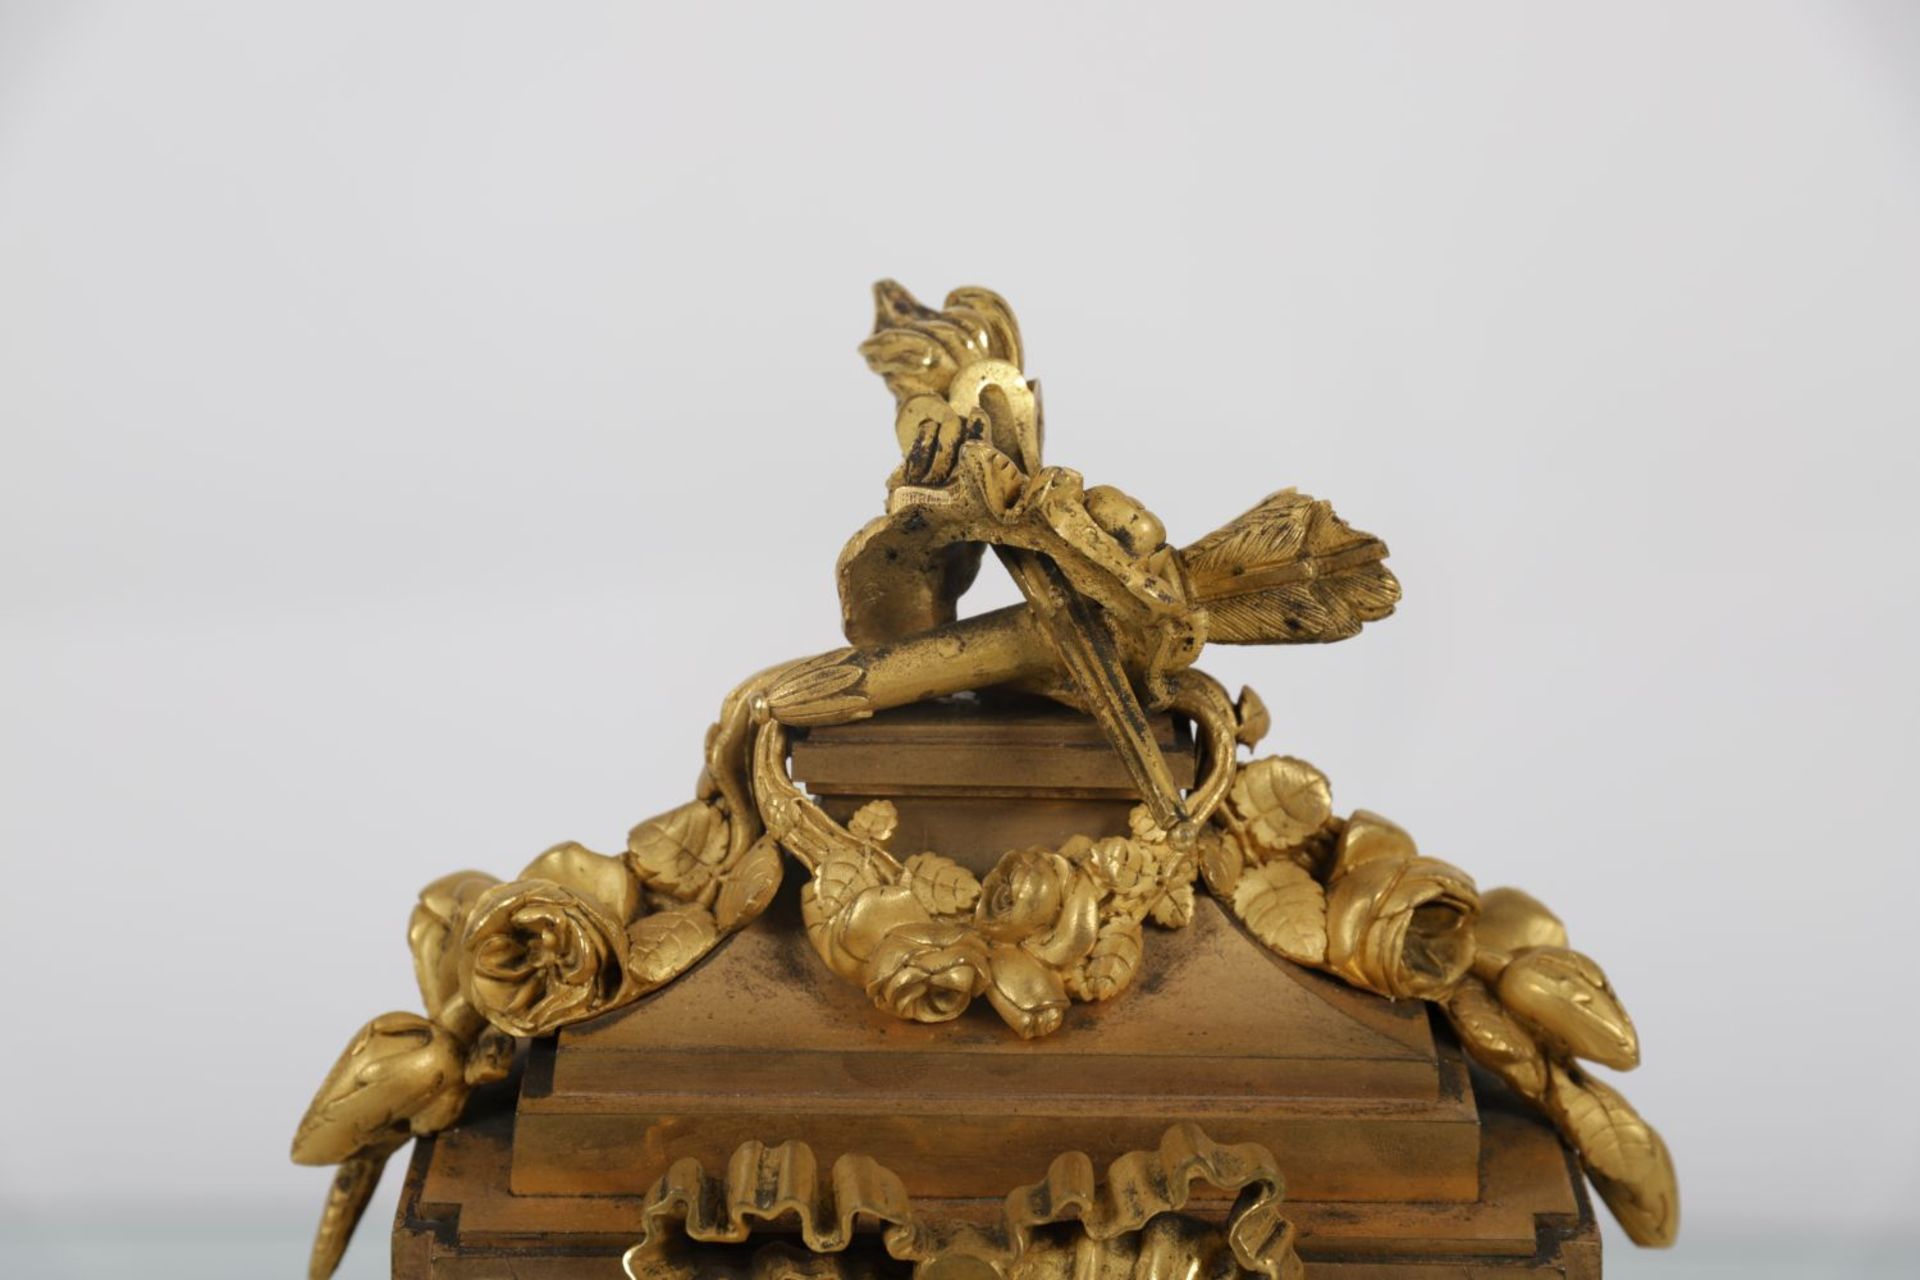 19TH-CENTURY FRENCH ORMOLU & PORCELAIN CLOCK - Image 3 of 4